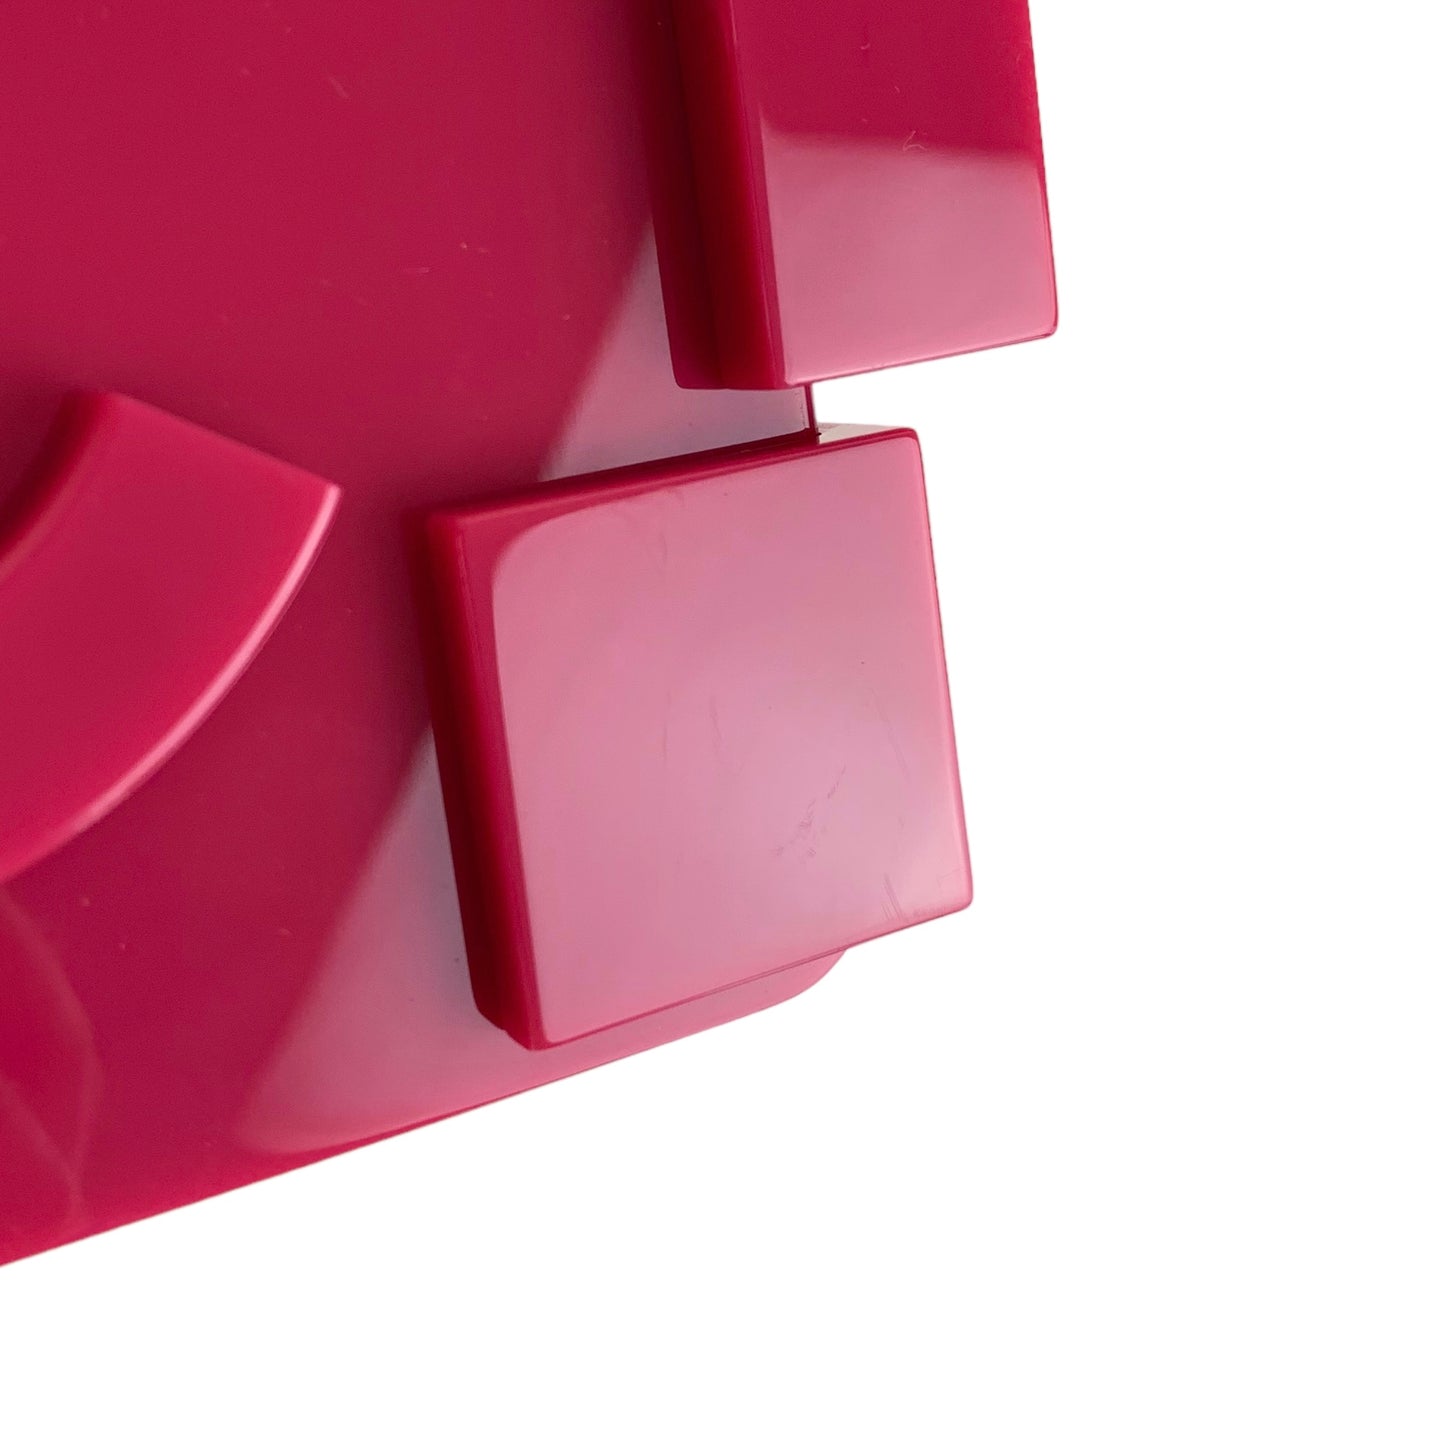 Chanel 2014 Pink Lego Brick Acrylic Minaudière Clutch Shoulder Bag